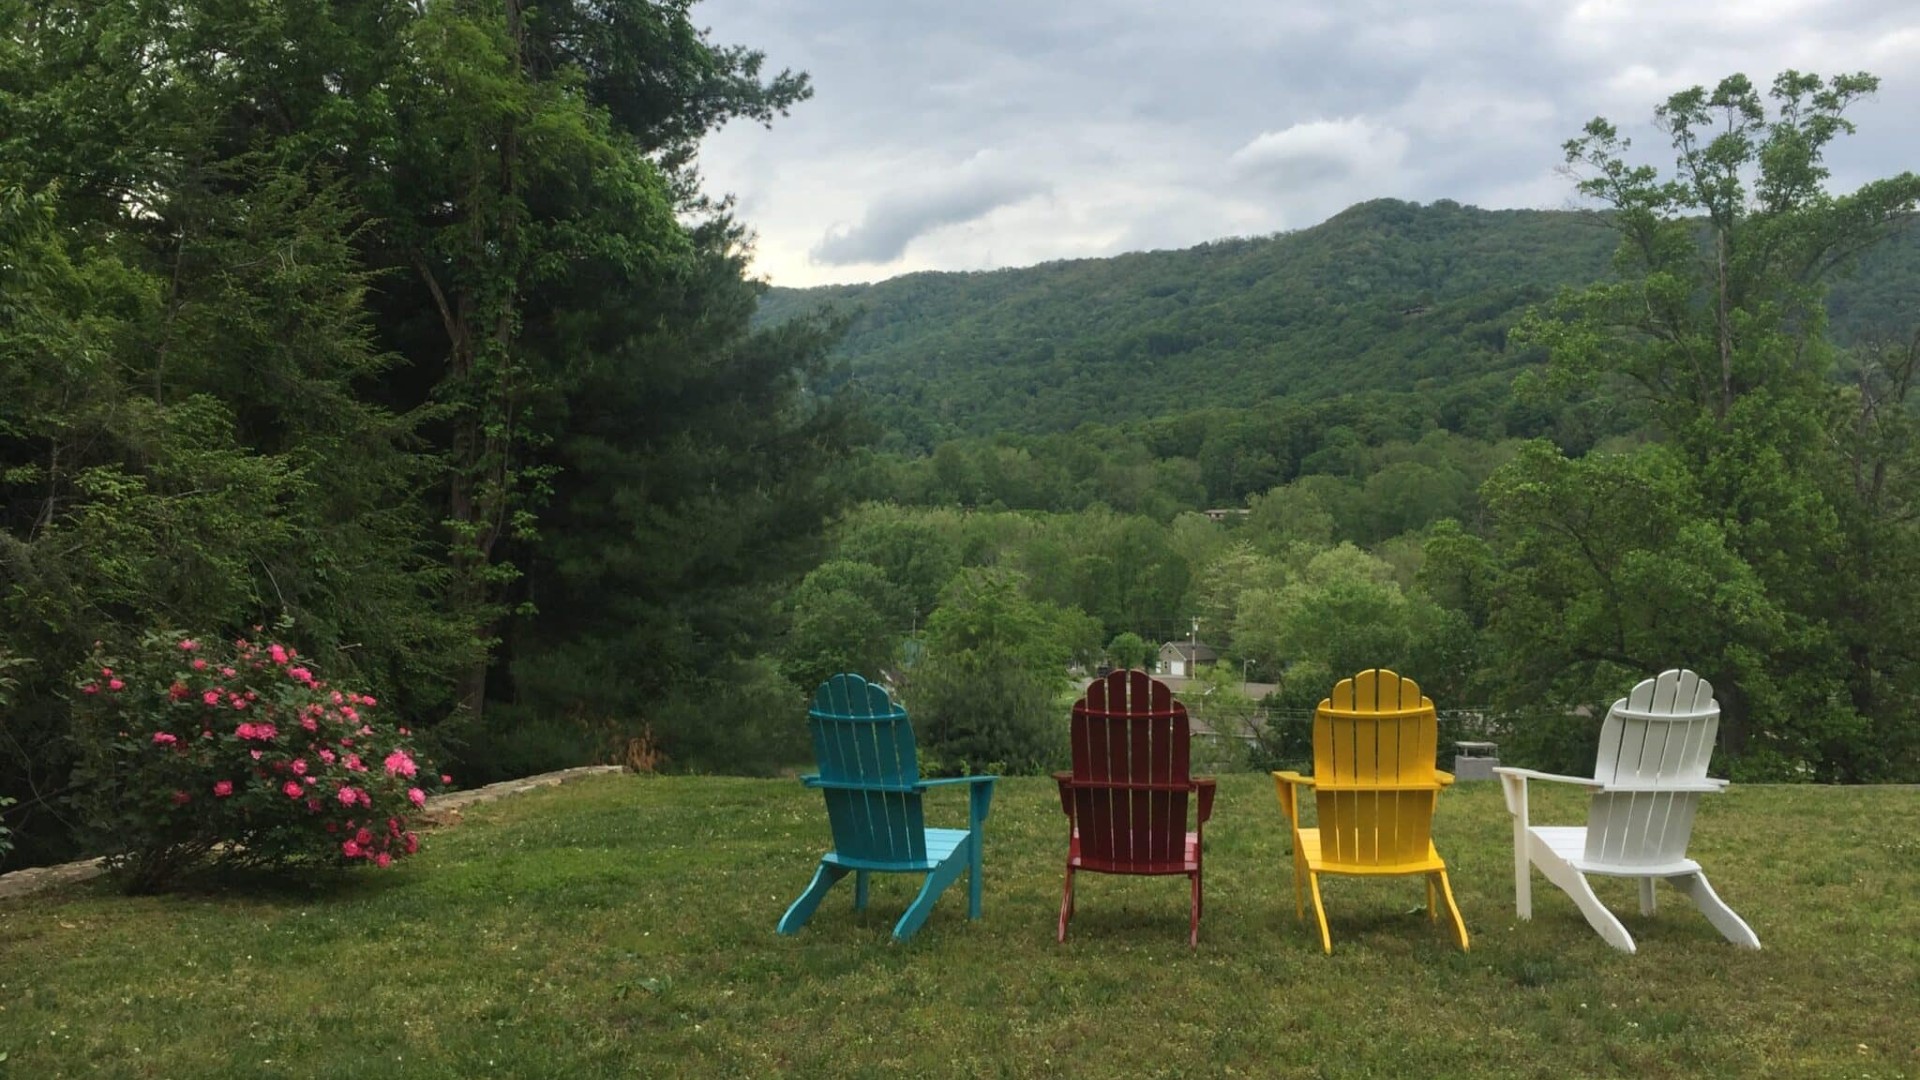 Adirondack chairs in the yard Andon reid